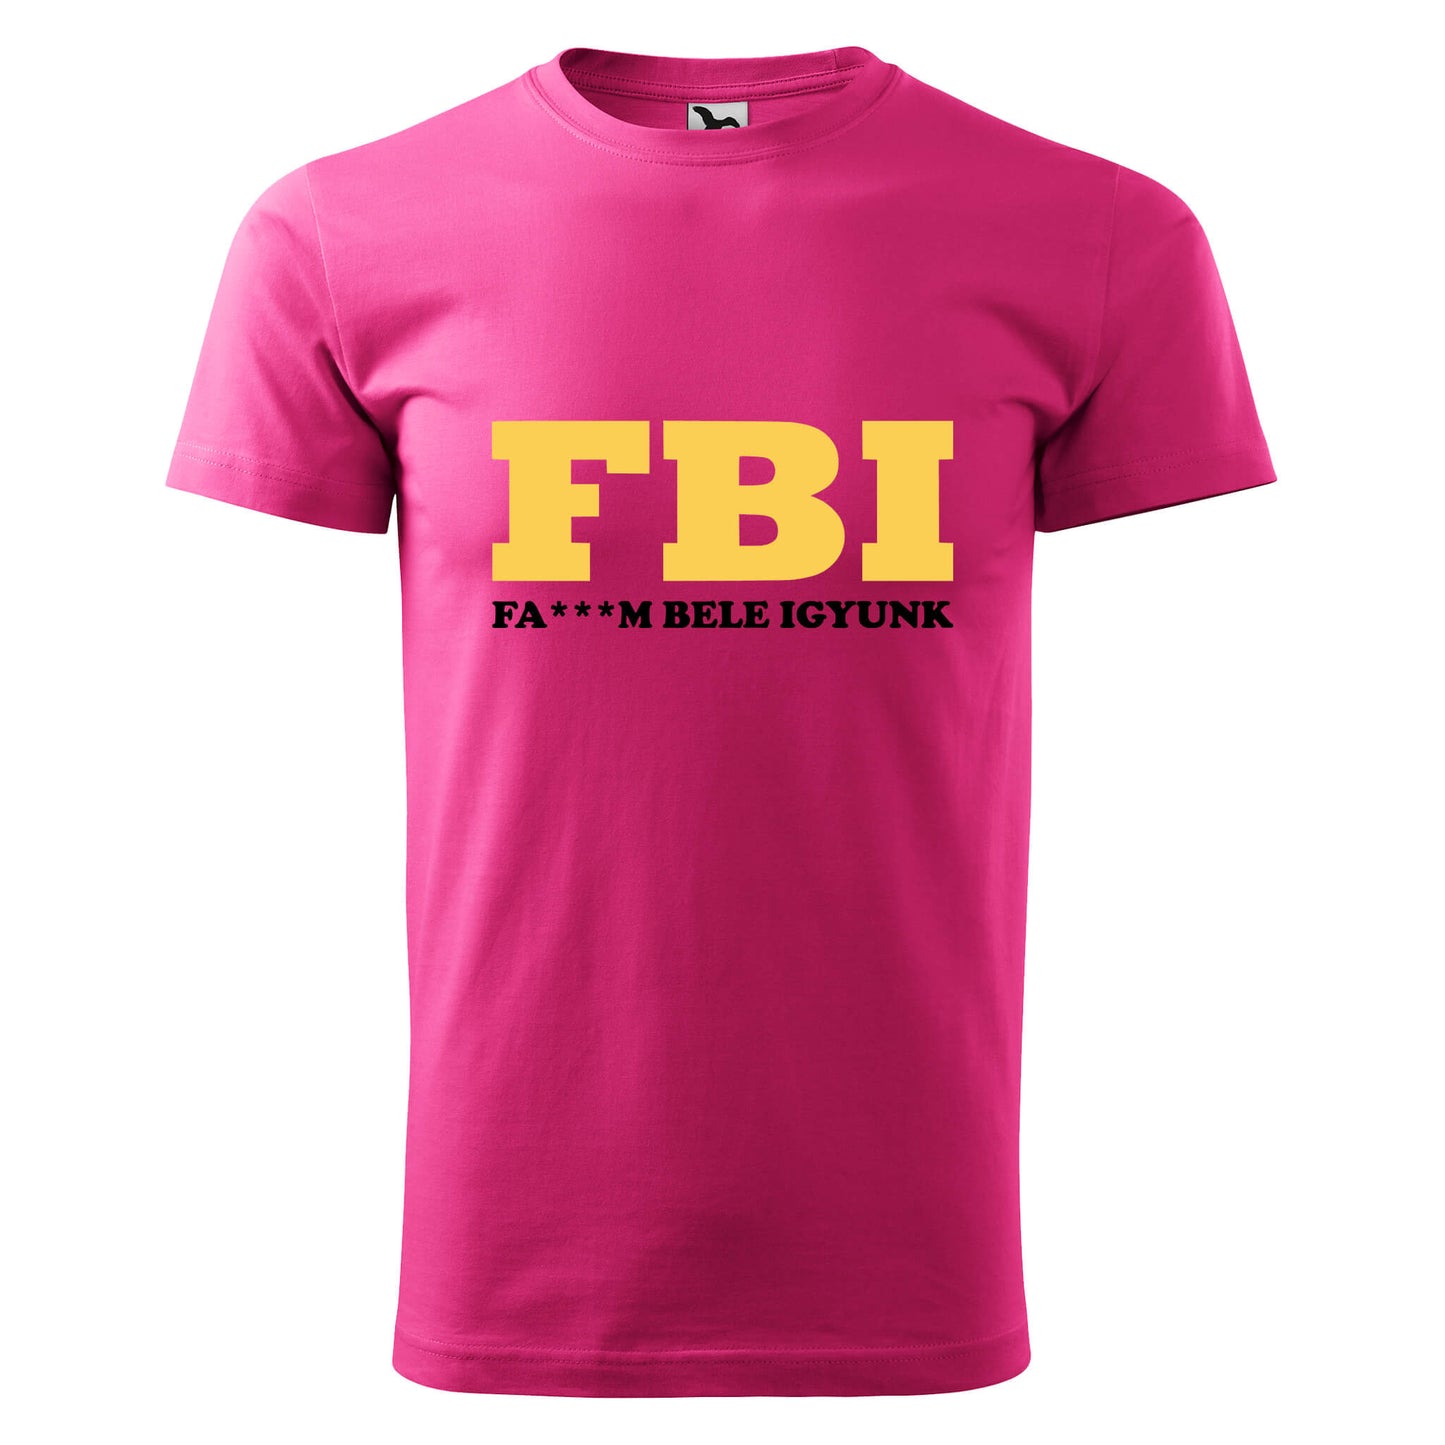 Faszom bele igyunk fbi t-shirt - rvdesignprint